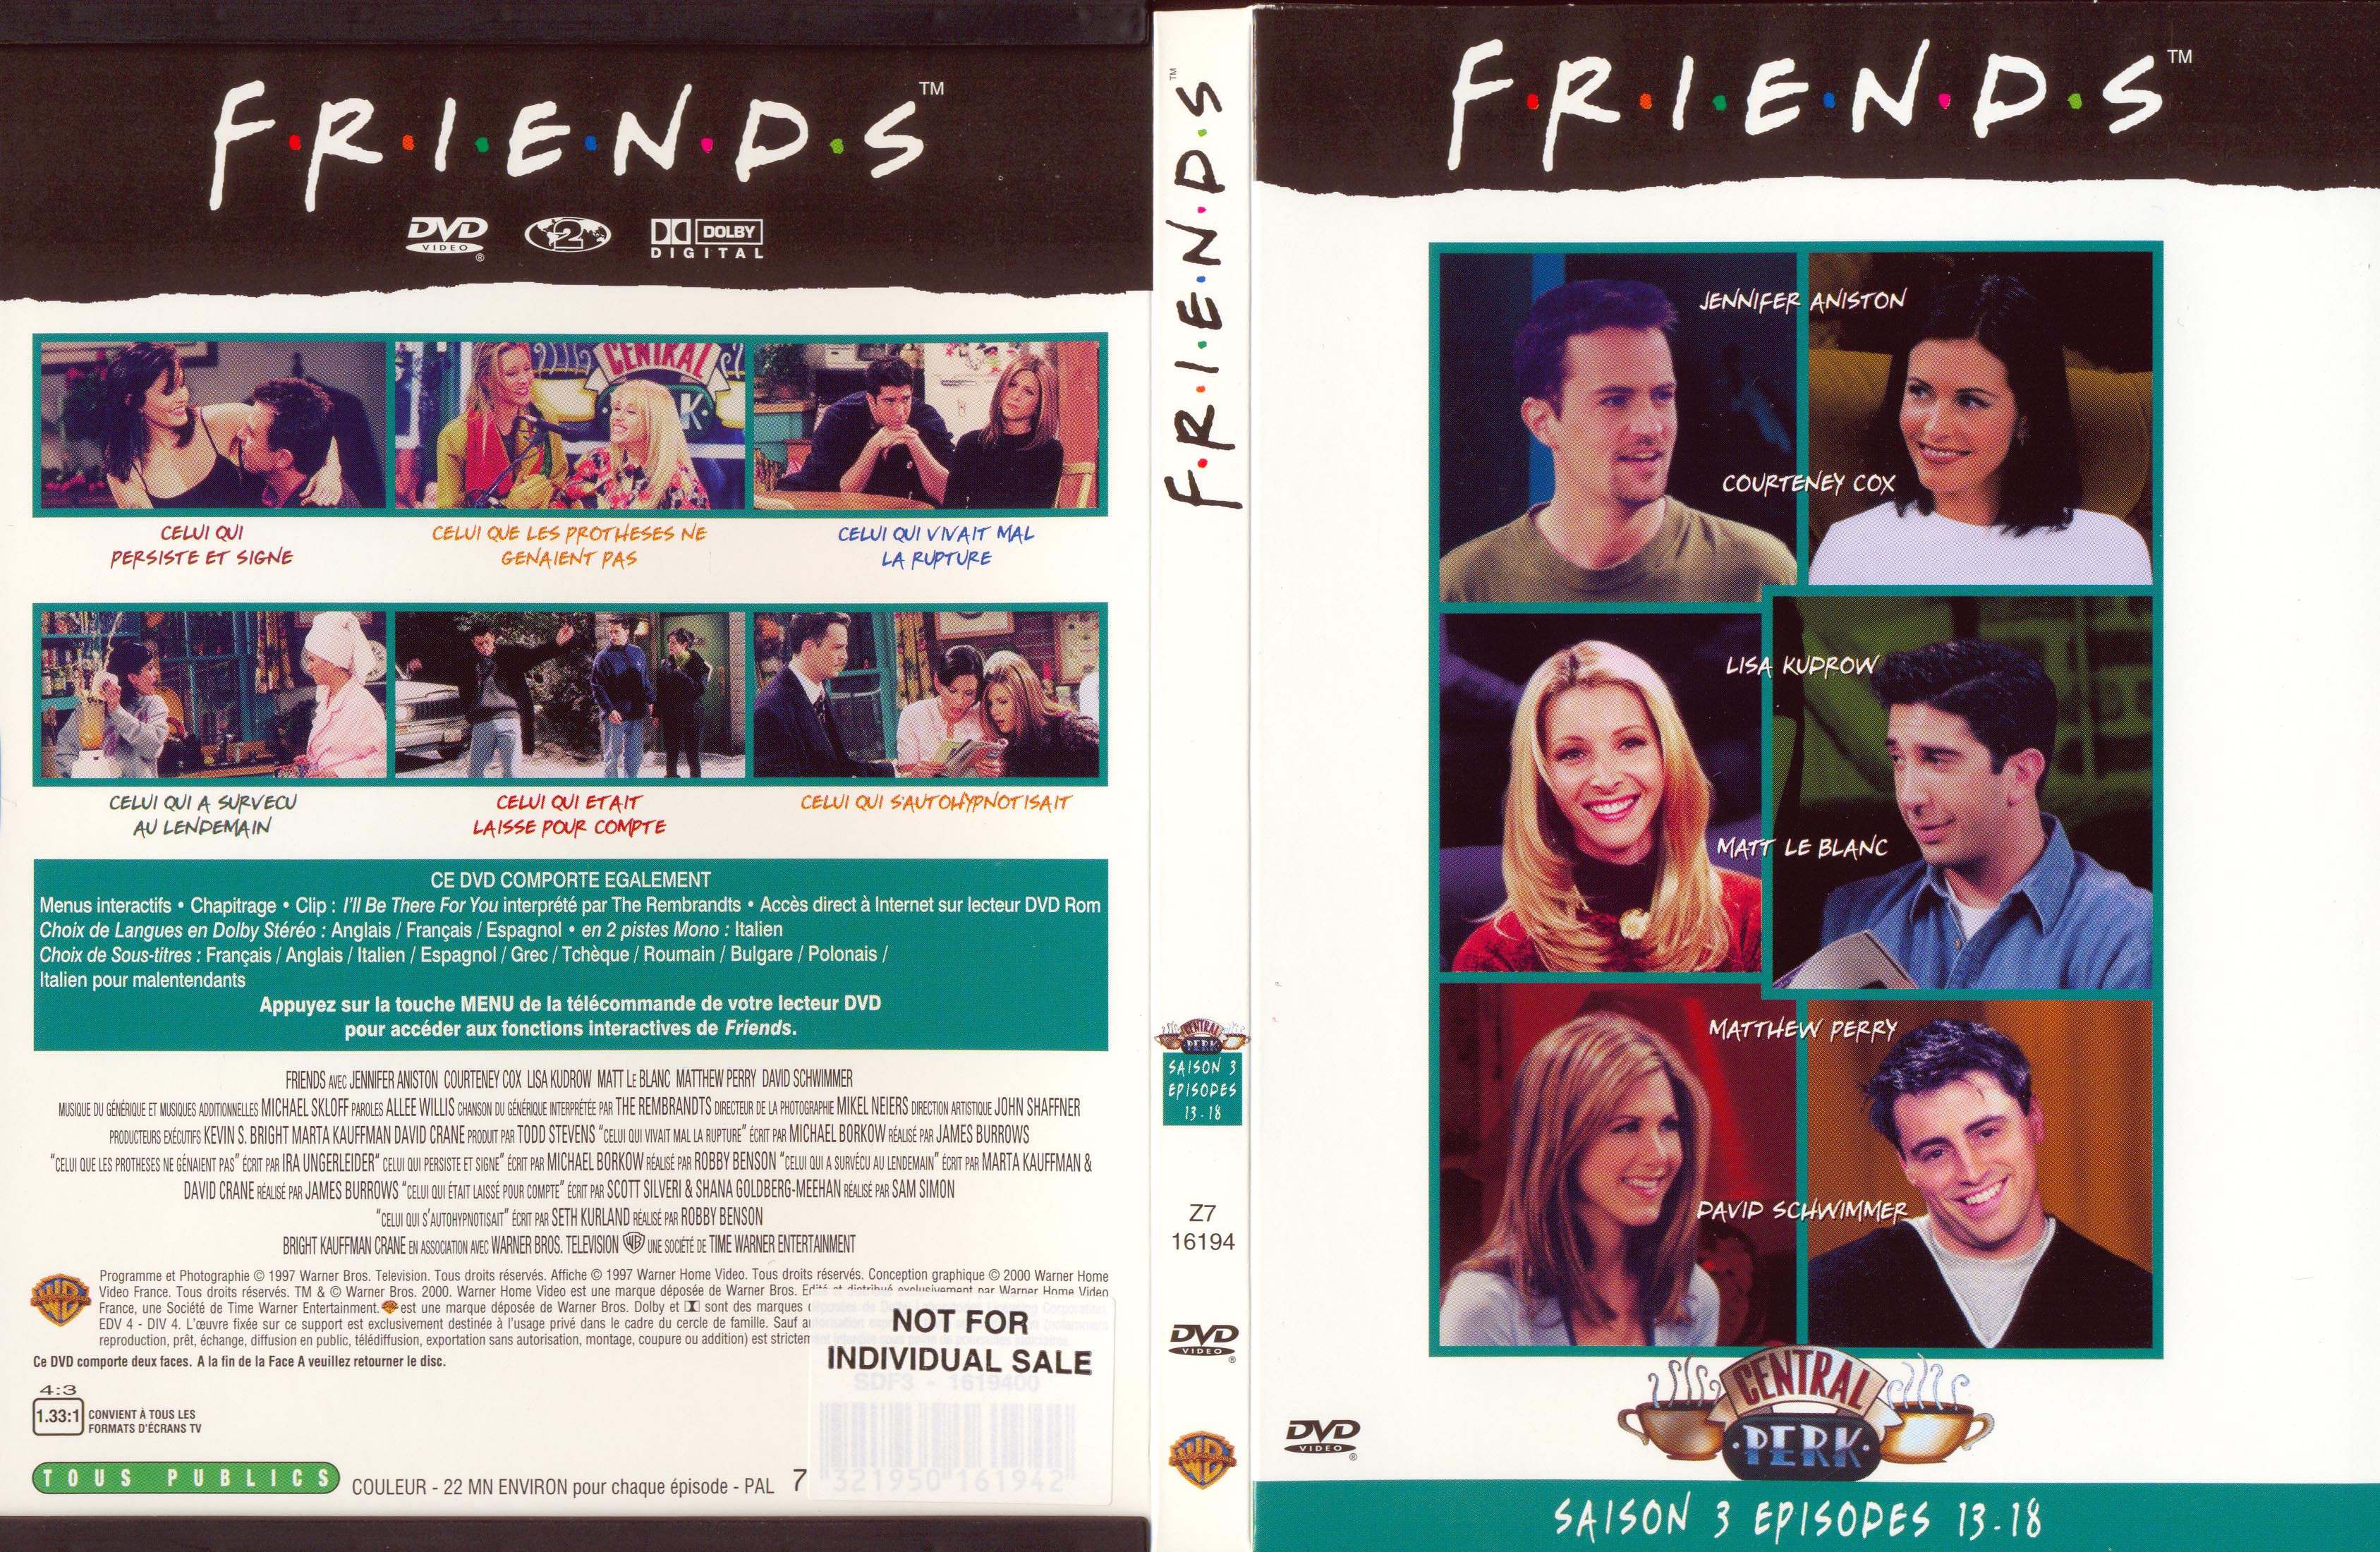 Jaquette DVD Friends saison 3 dvd 3